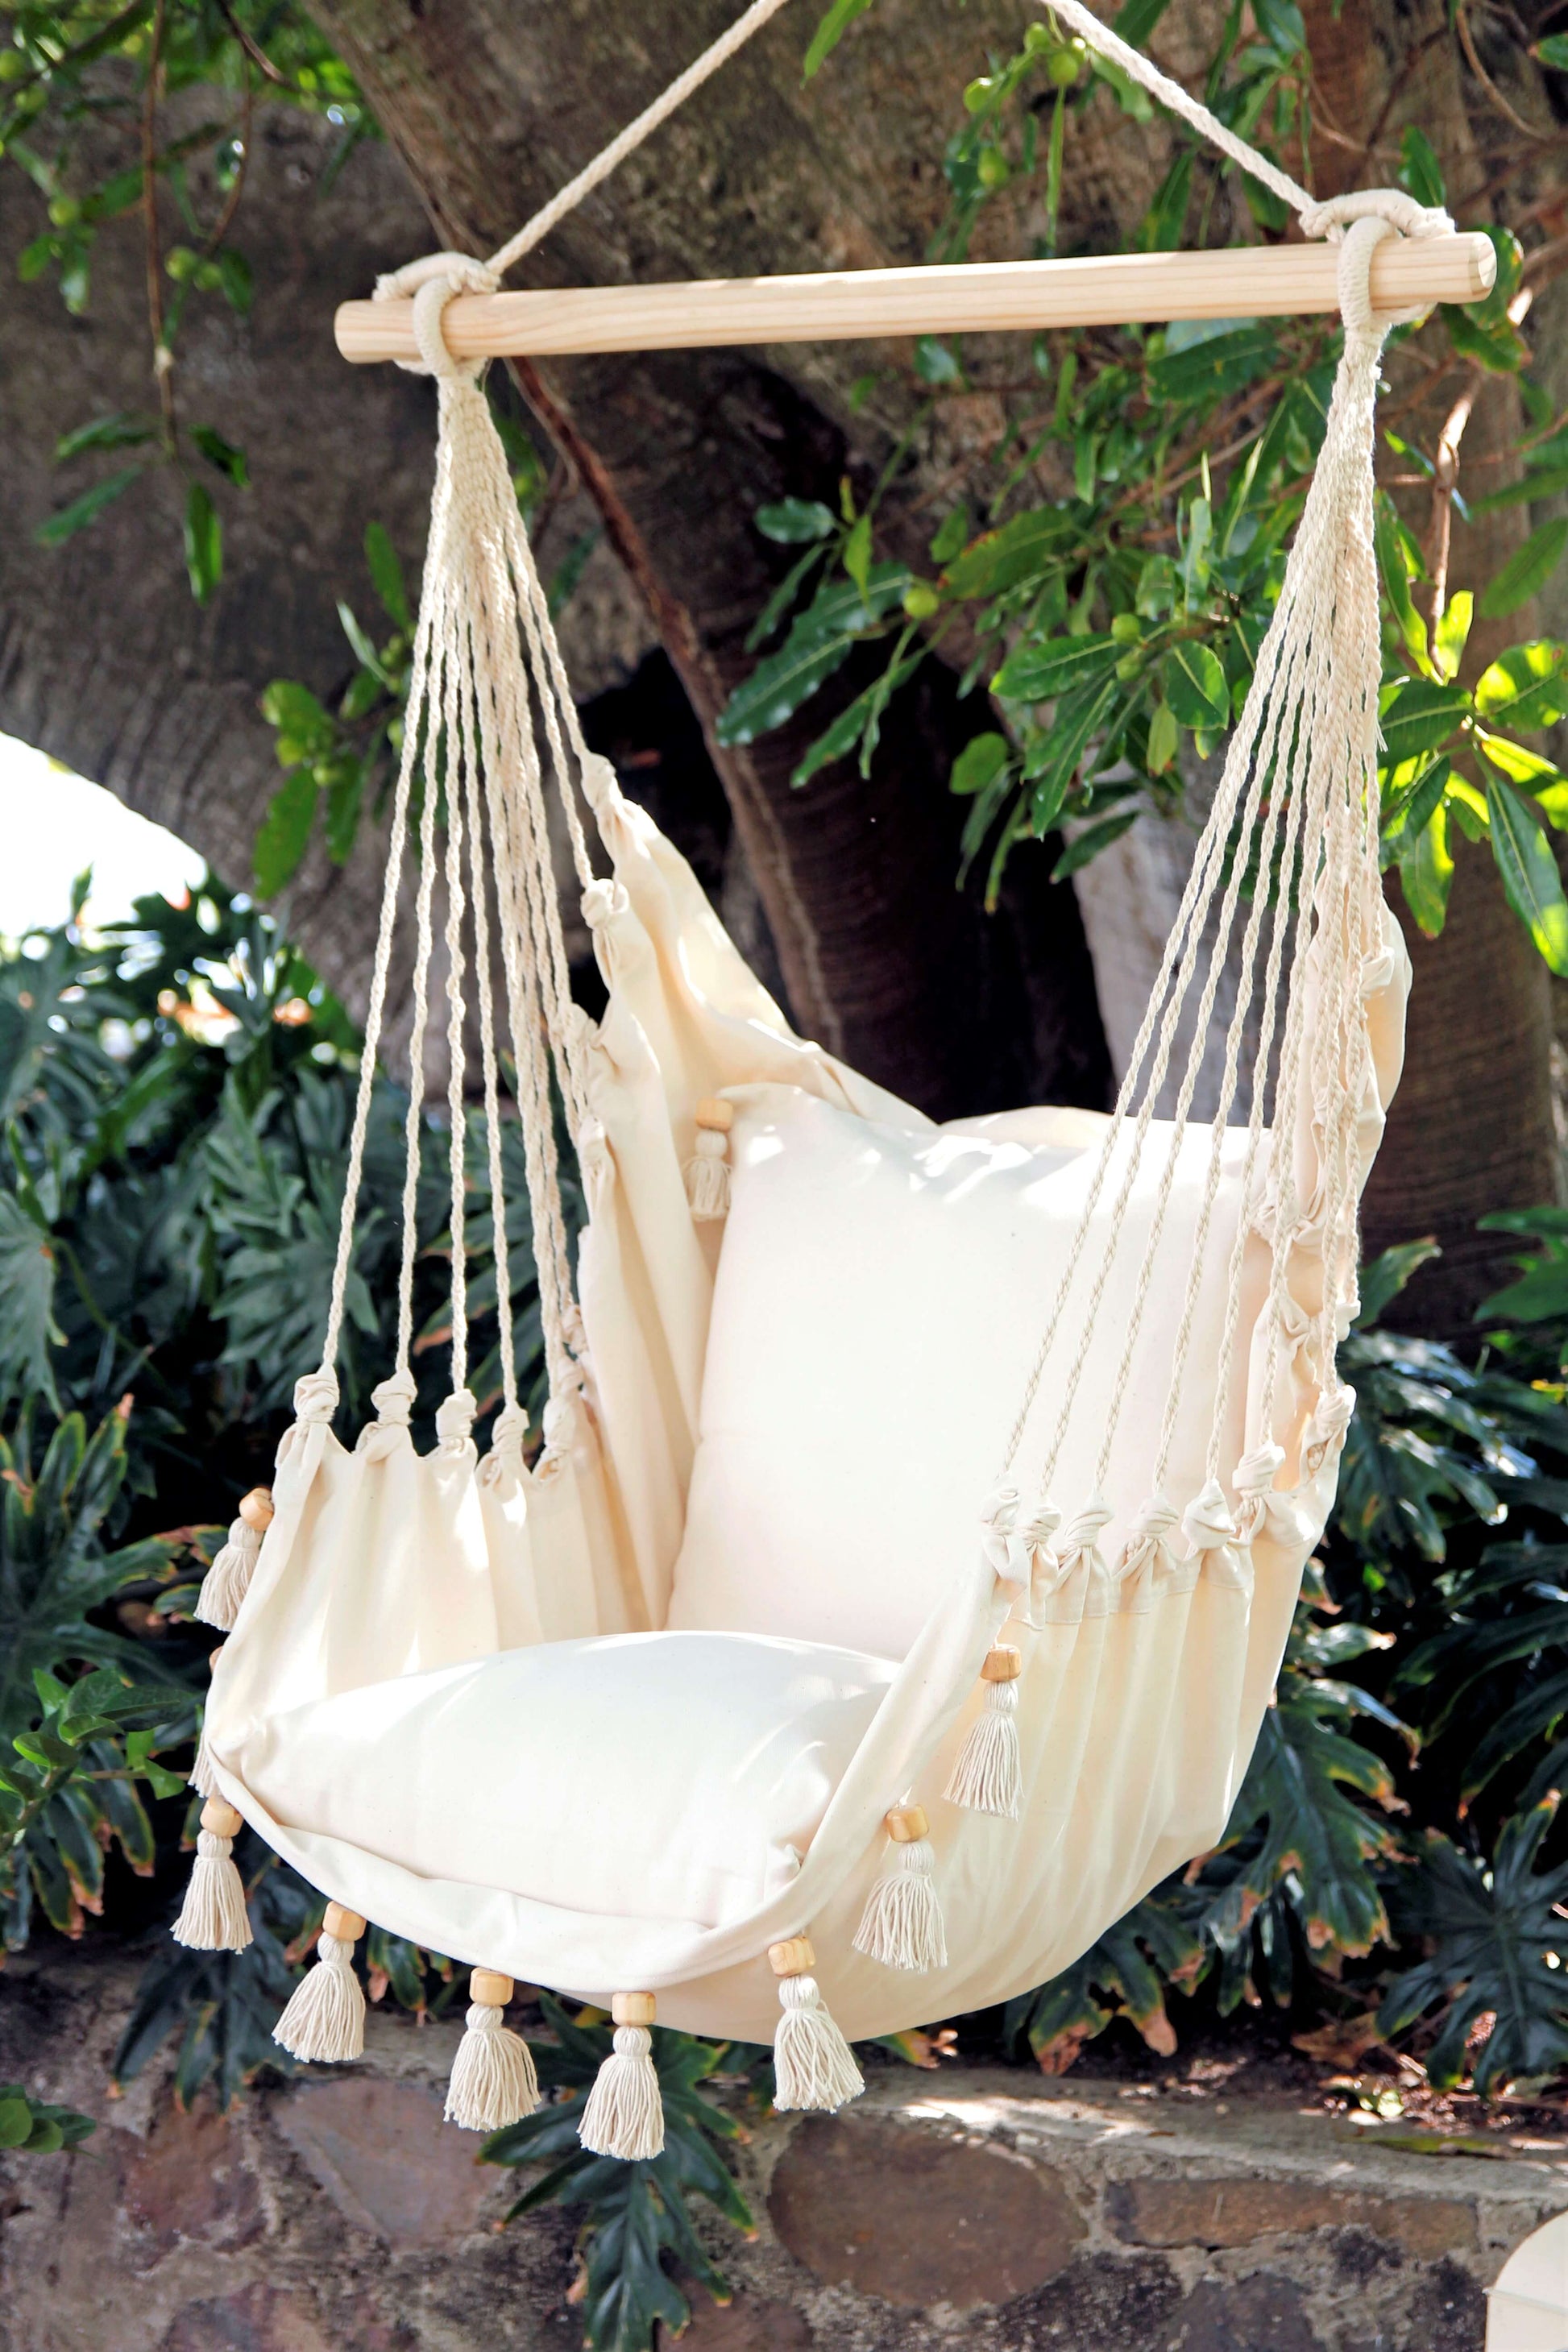 Hammock Chair With Tassels in a garden